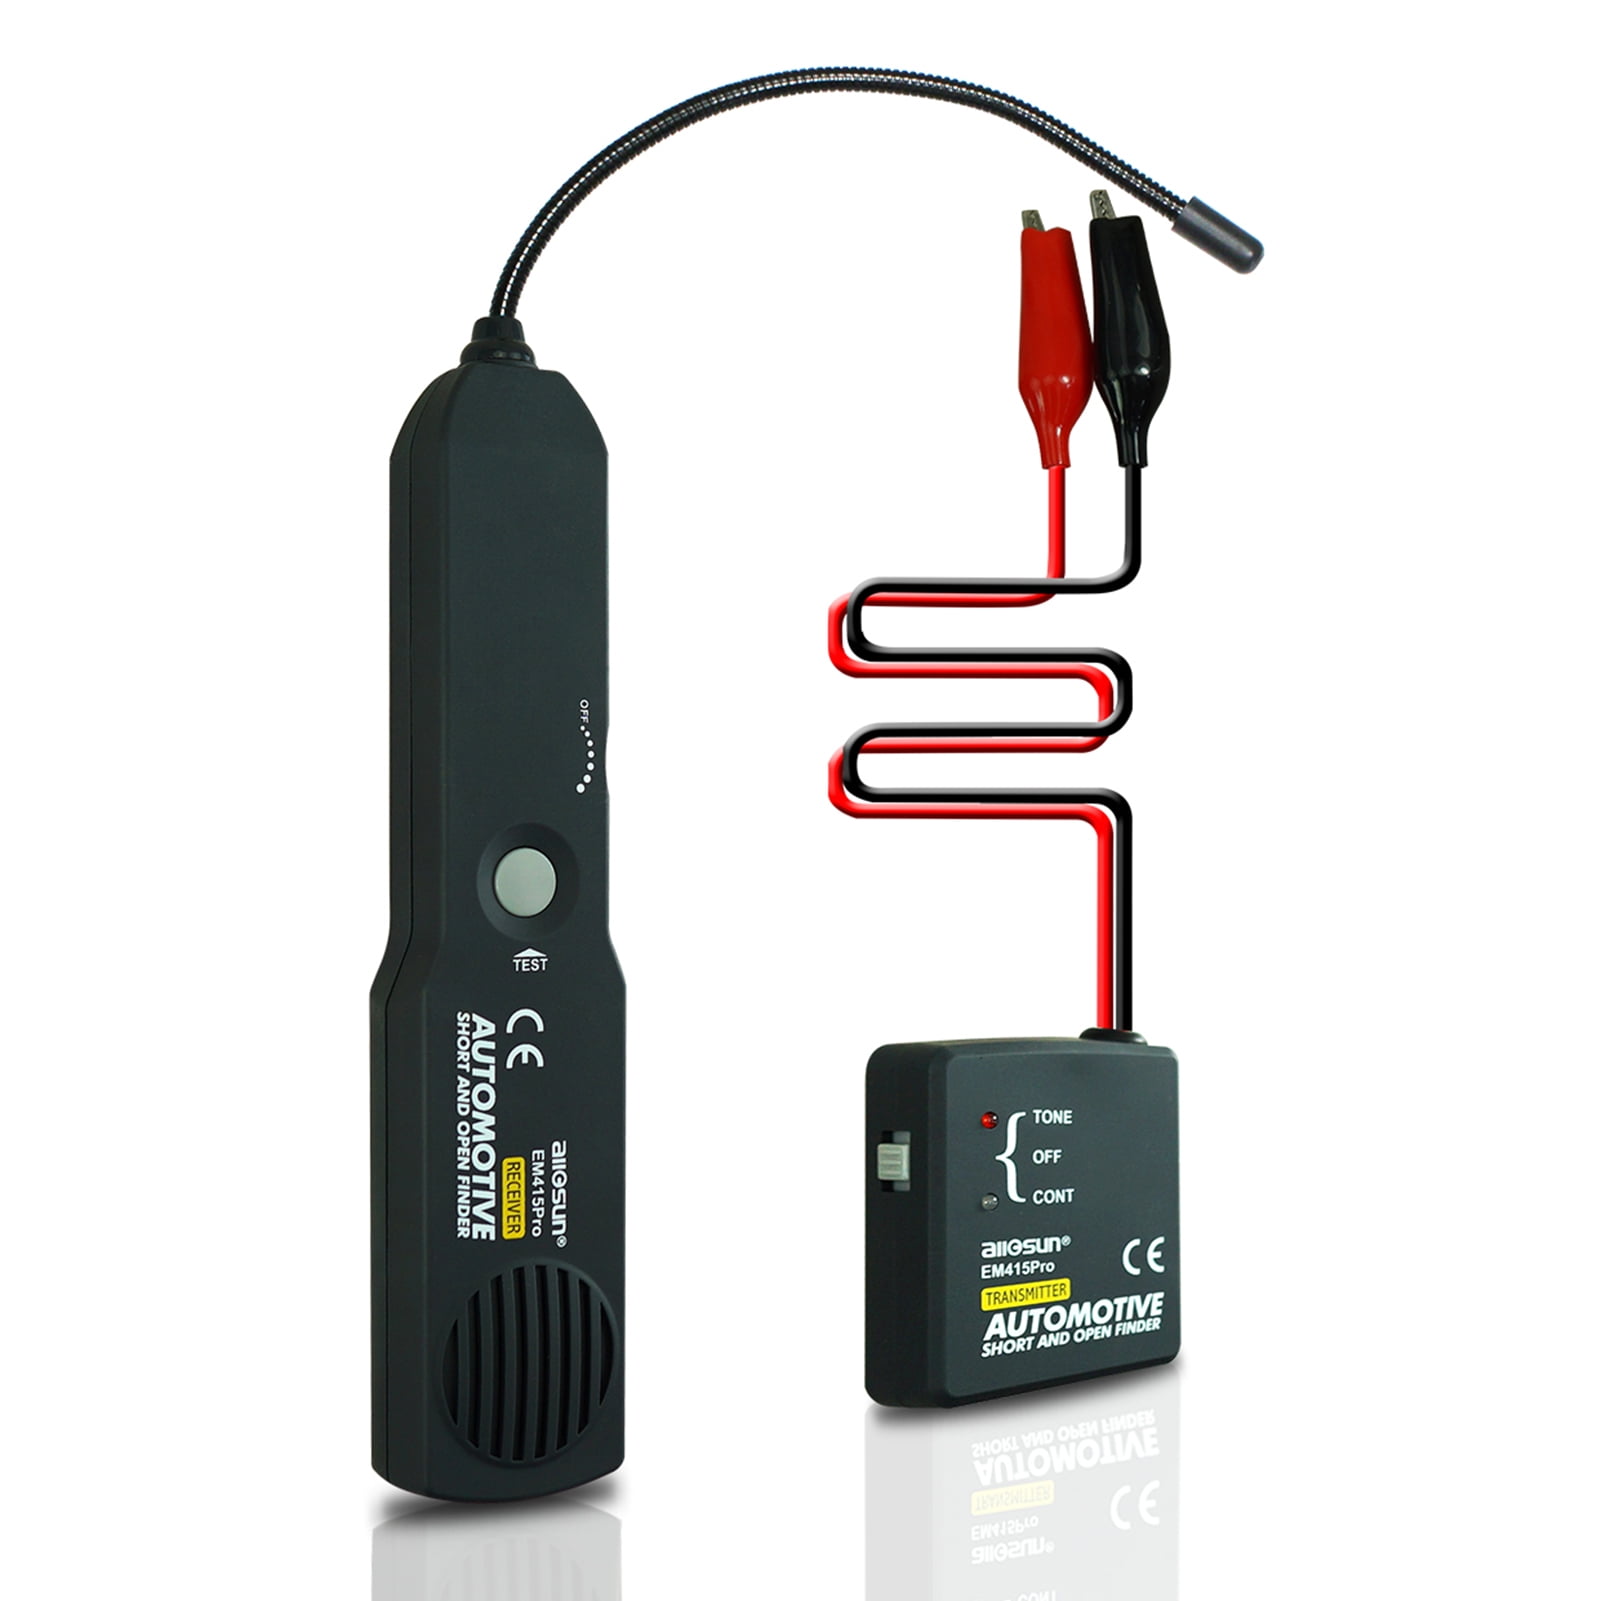 Achetez EM415PRO Tester Automotive Tester Câble Fil Circuit